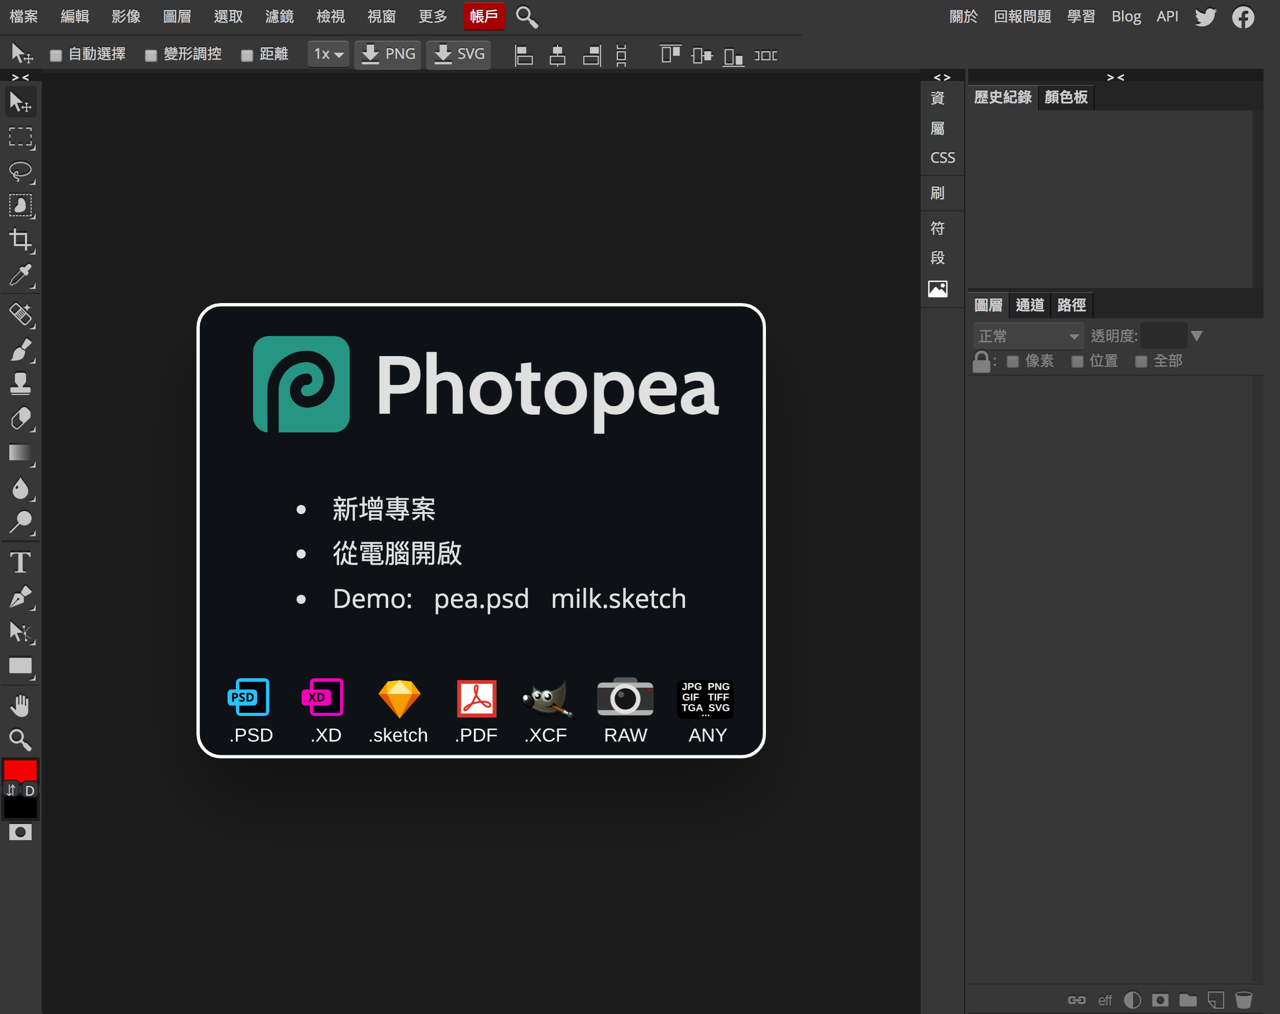 Photopea 免費圖片編輯器，堪稱 Photoshop 線上版支援 PSD 等常見格式